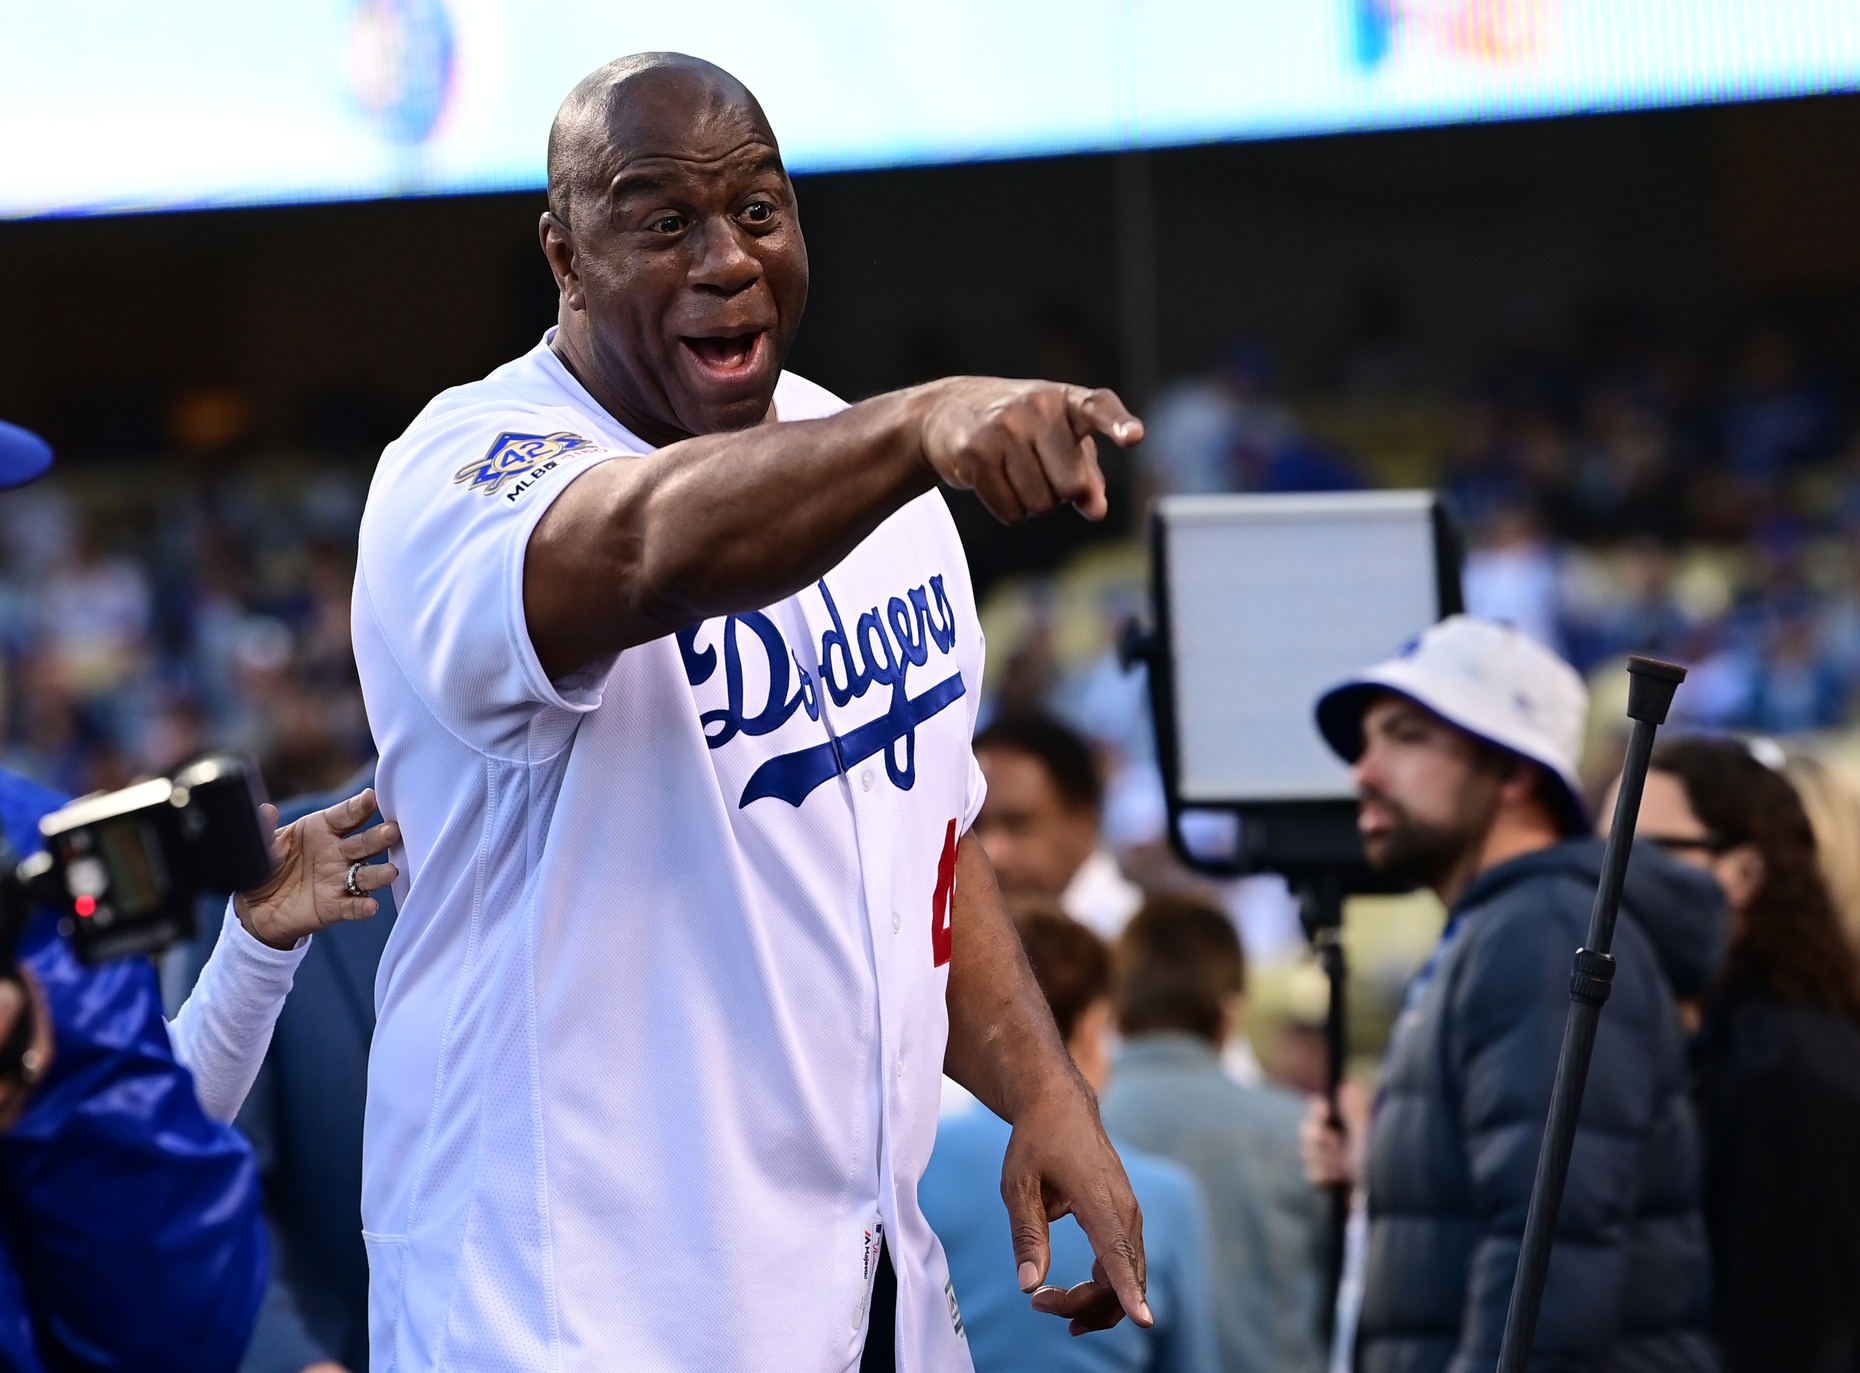 Dodgers Team Owner and Lakers Legend Magic Johnson Ofrece una Perspectiva Positiva para LA.